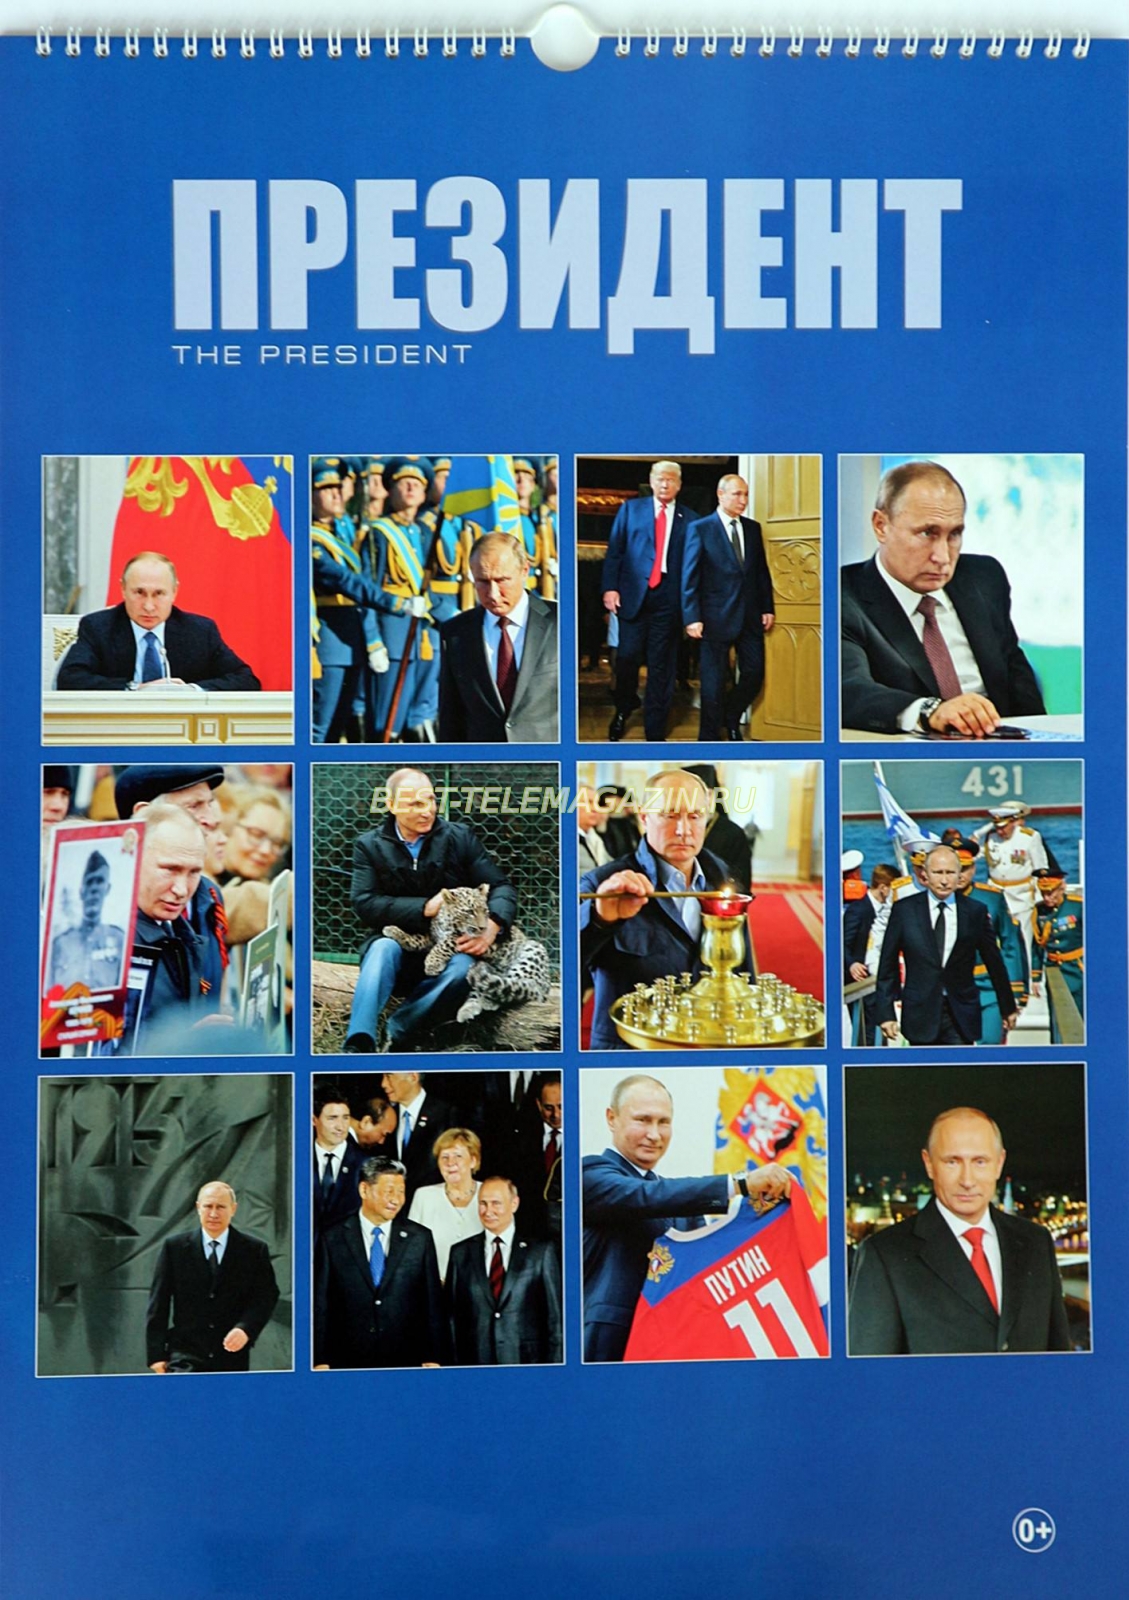 Putin Kalender 2021 Monatskalender Календарь Владимира Путина на 2021 год 